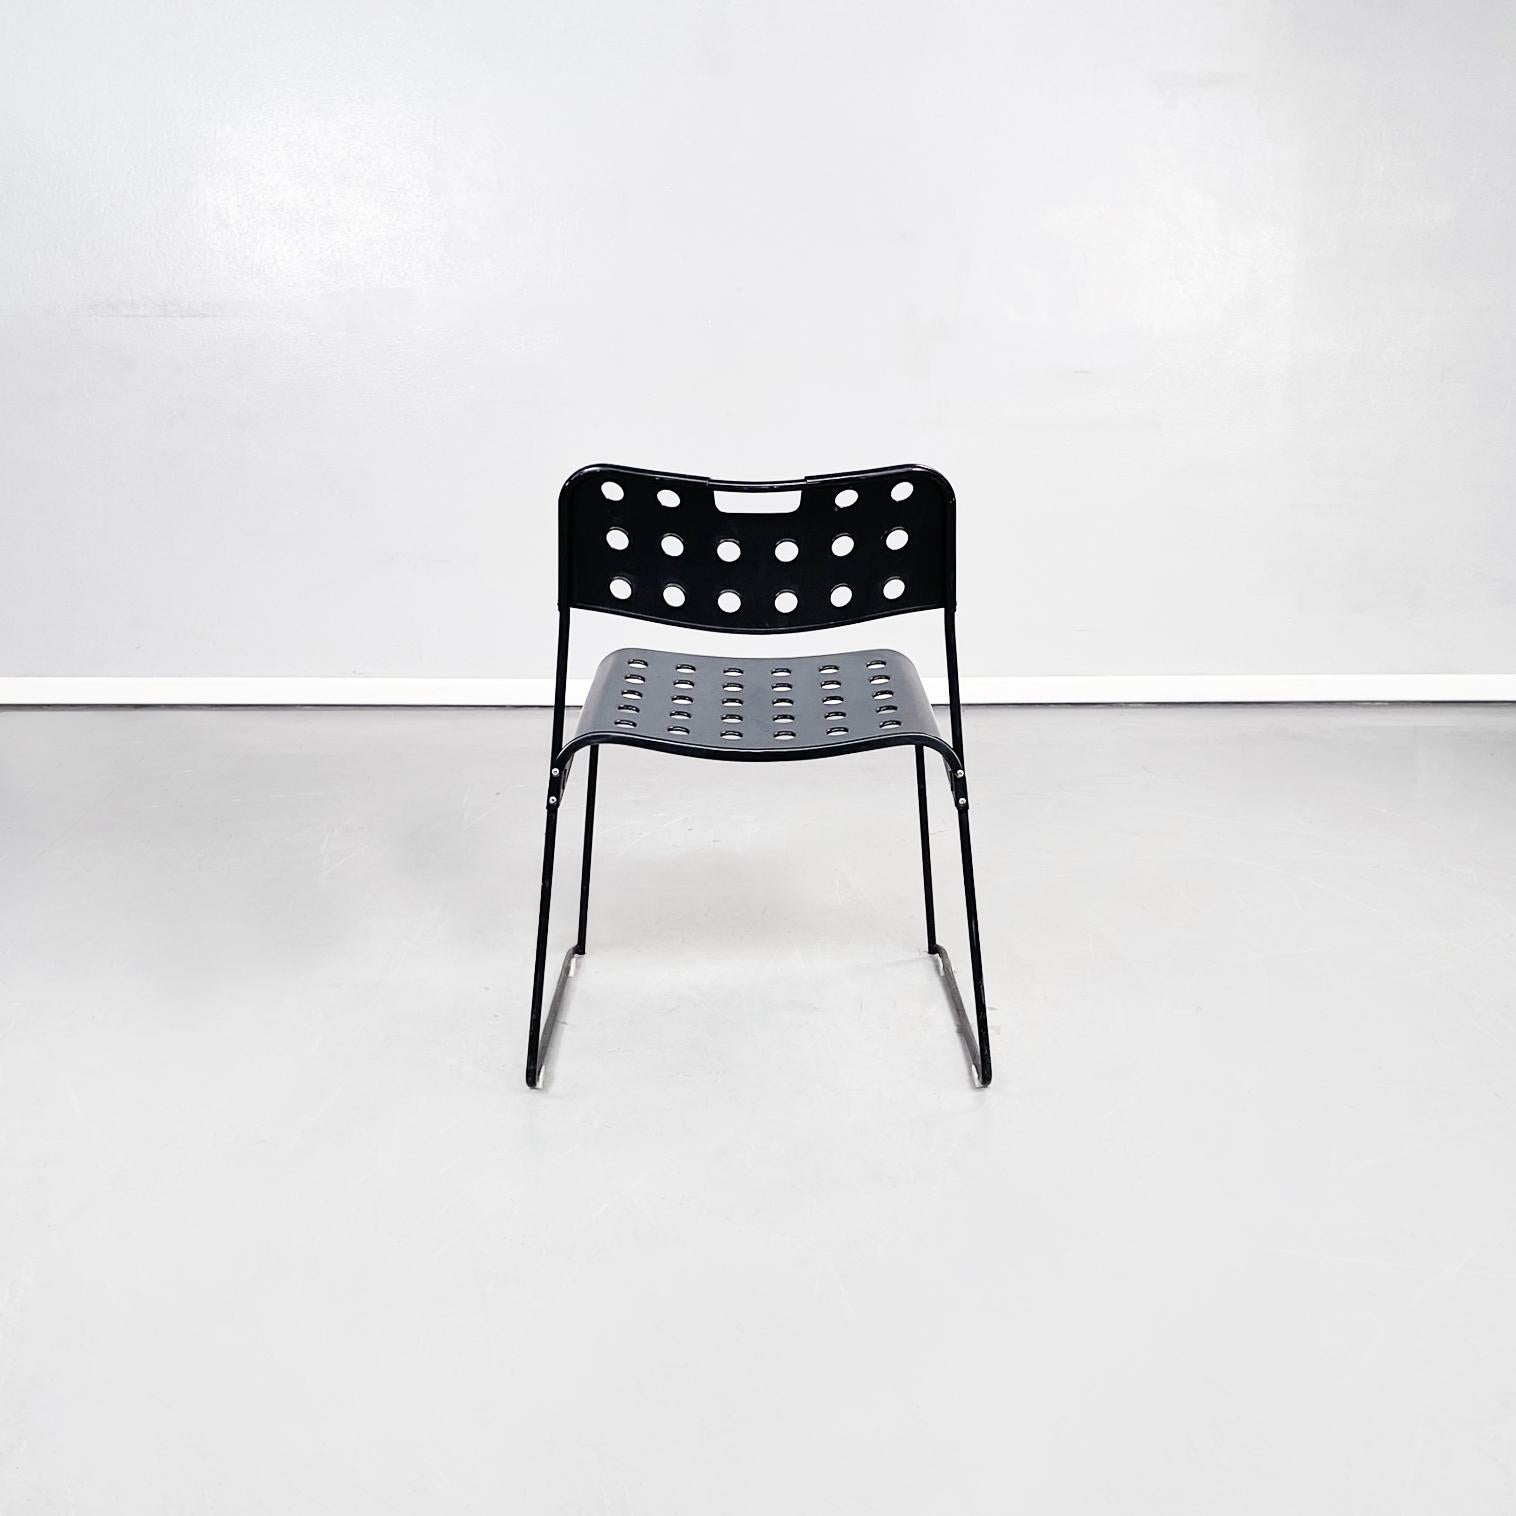 Late 20th Century Italian Modern Black Steel Chairs Omstak by Rodney Kinsman Bieffeplast, 1970s For Sale